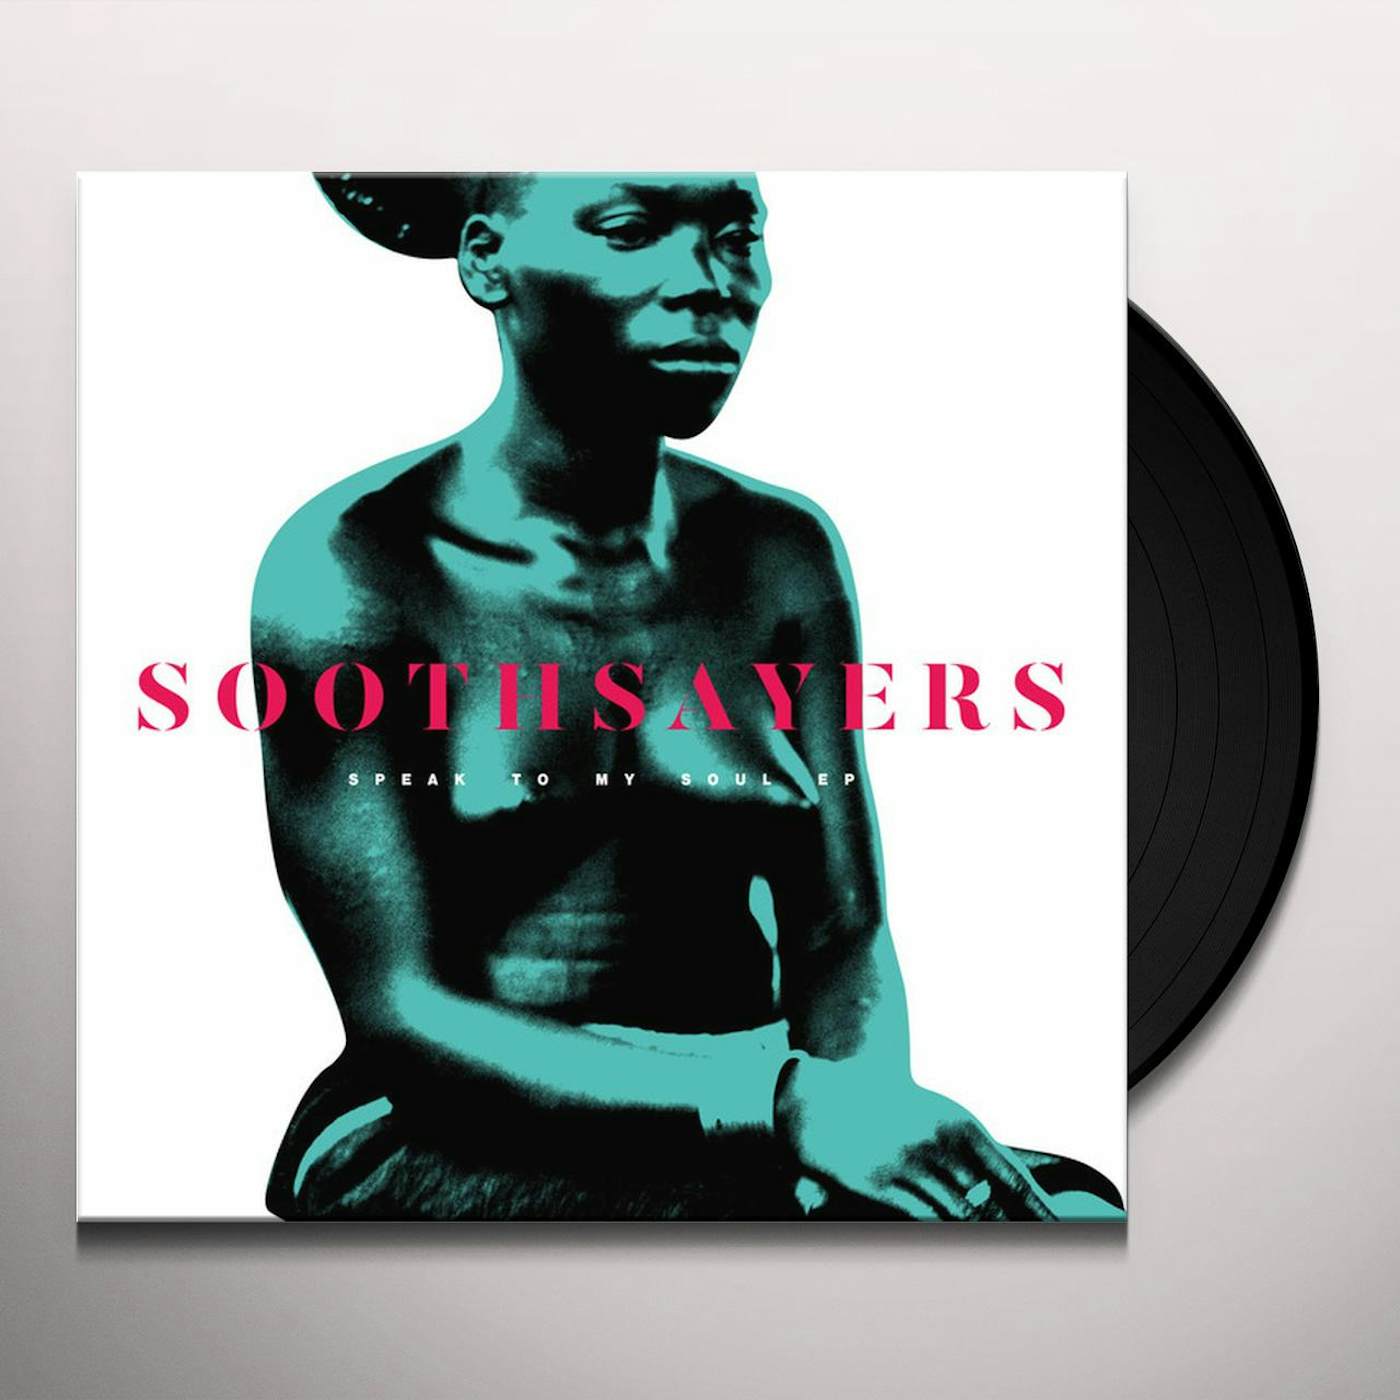 Soothsayers Speak to My Soul Vinyl Record